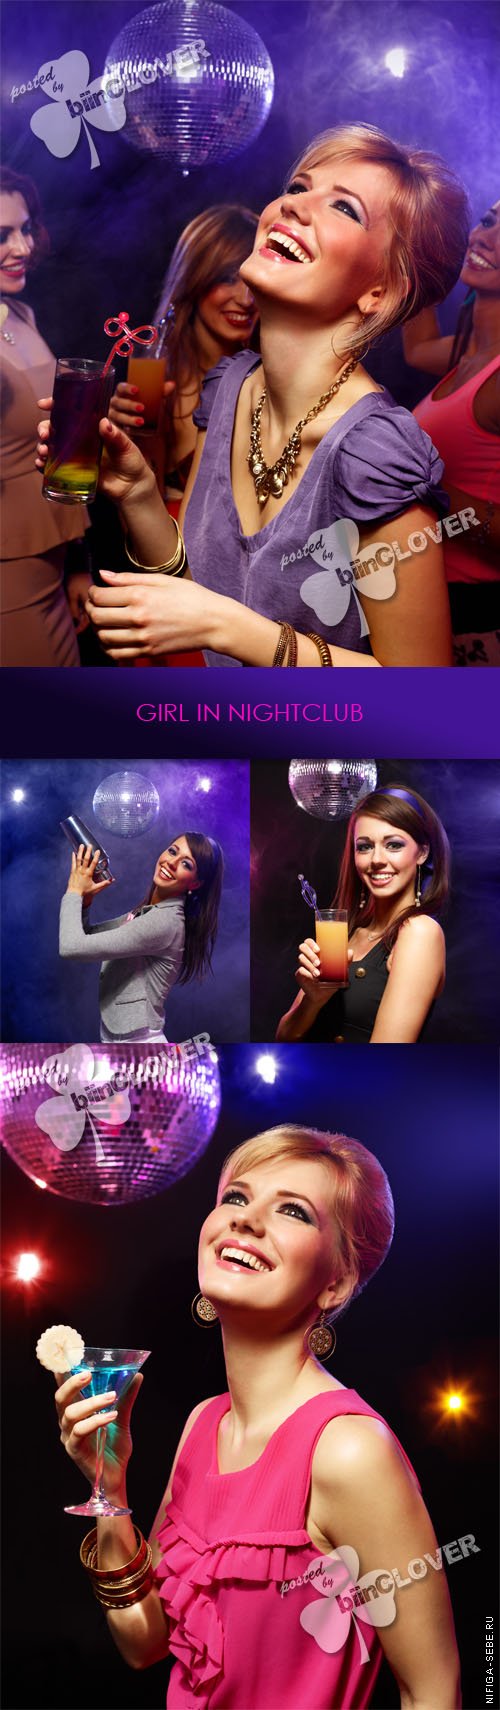 Girl  in nightclub 0236